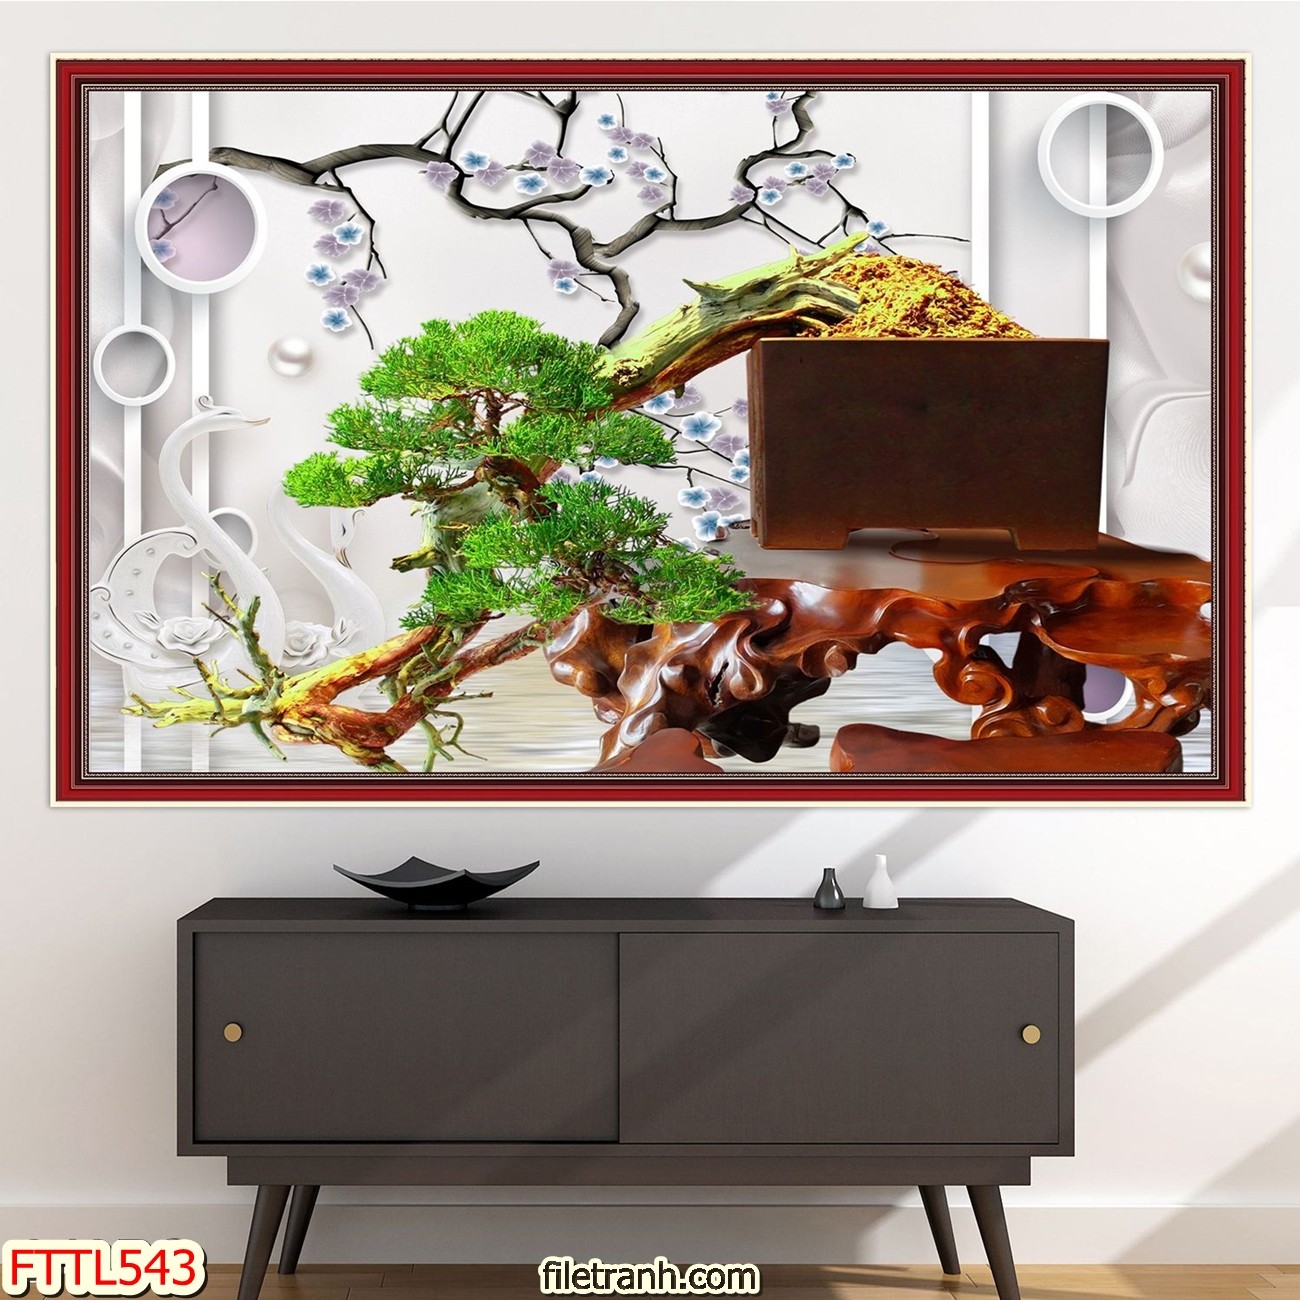 https://filetranh.com/file-tranh-chau-mai-bonsai/file-tranh-chau-mai-bonsai-fttl543.html